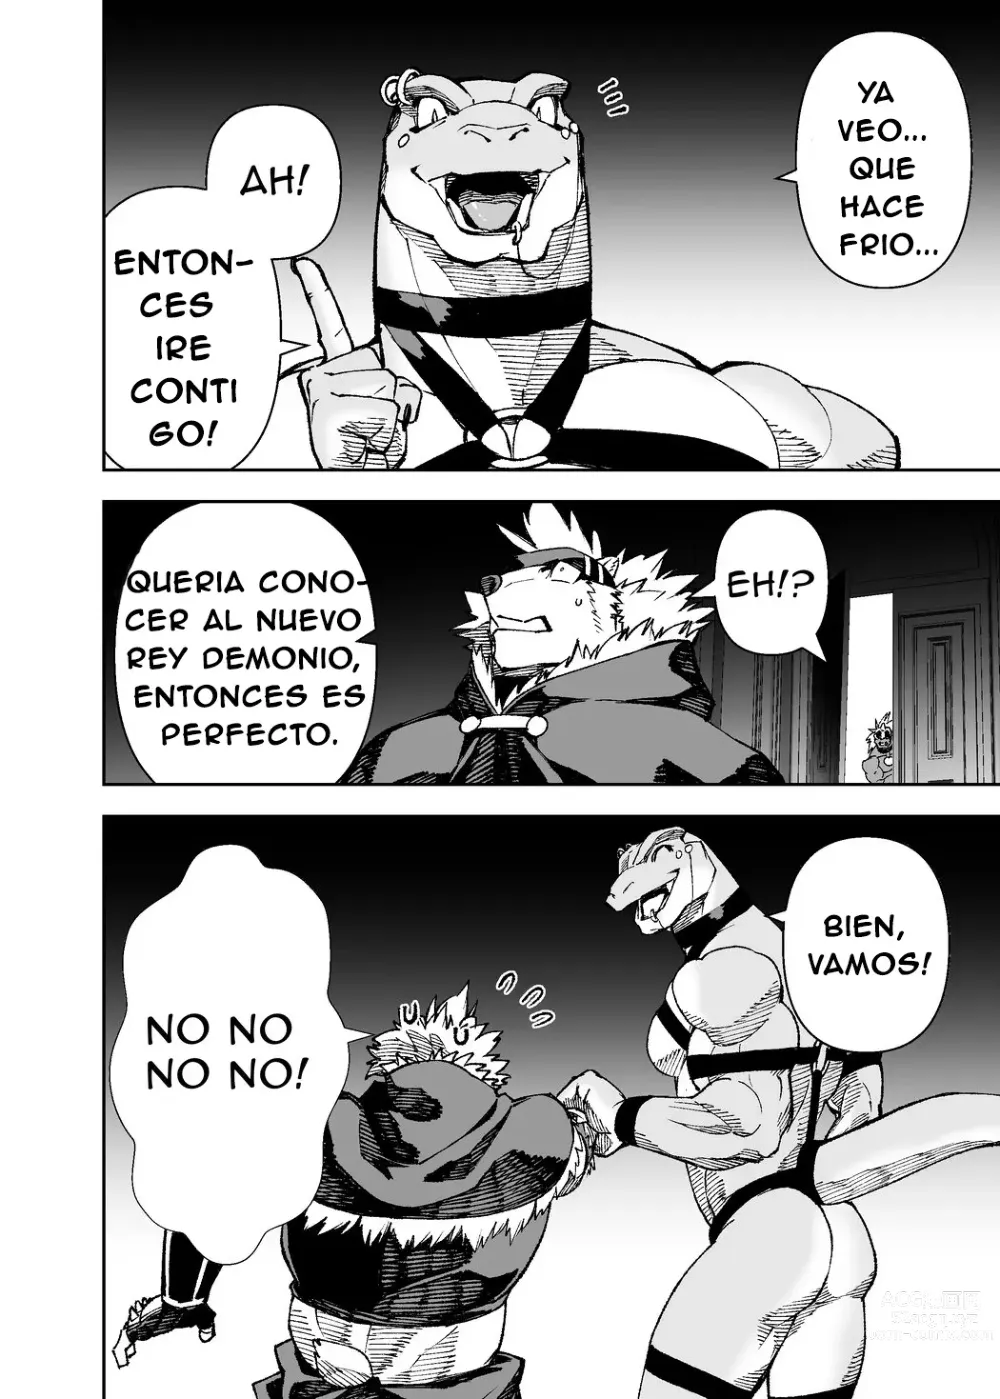 Page 465 of doujinshi Manga 02 - Partes 1 a 12